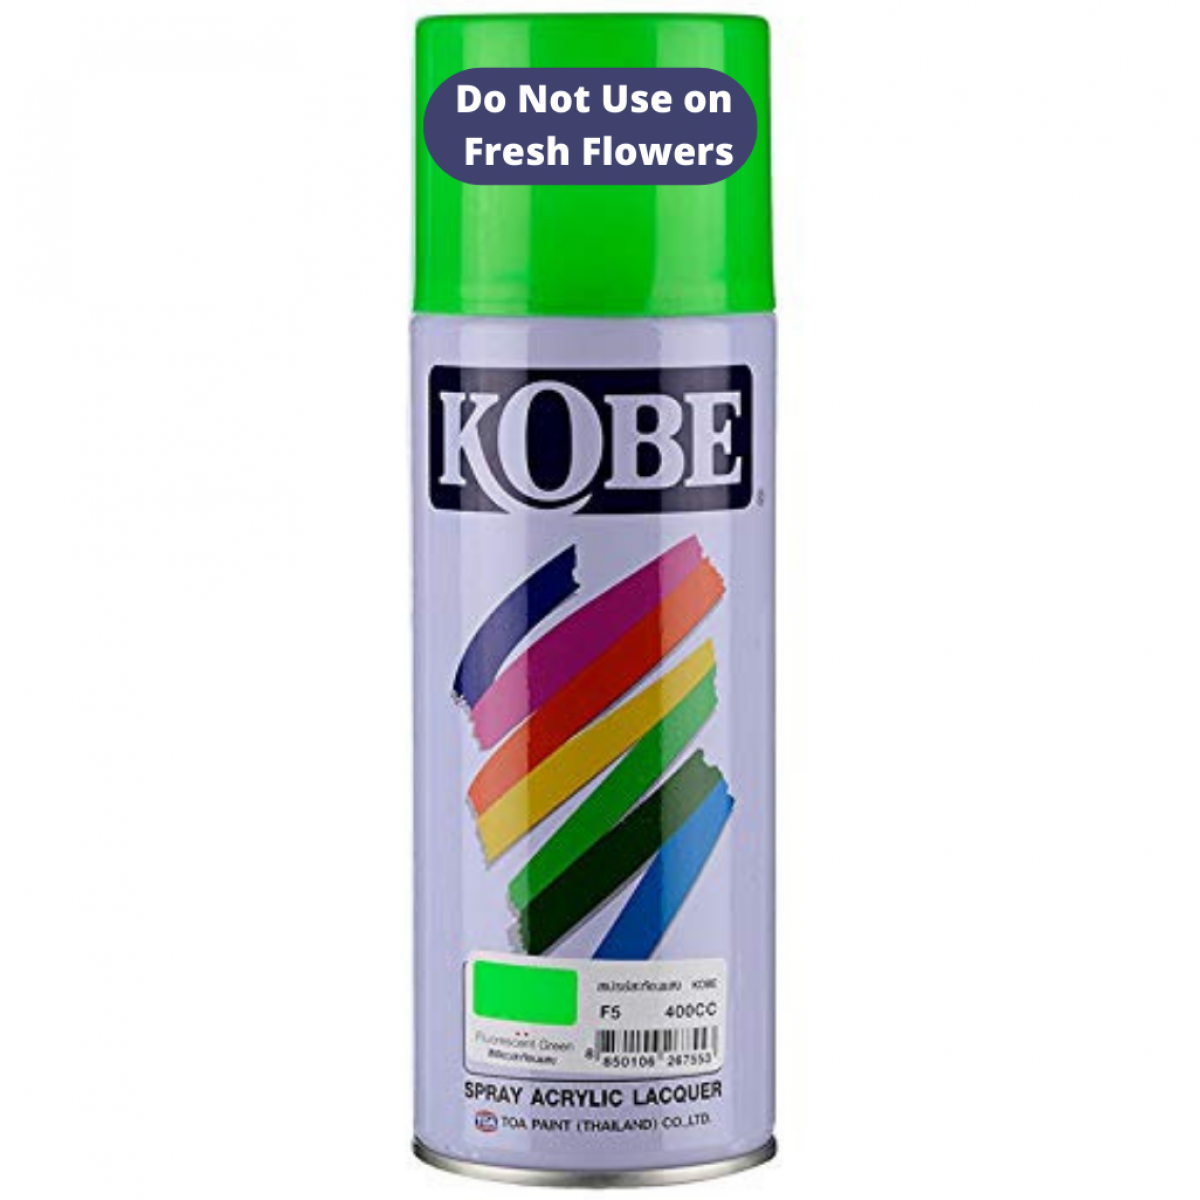 F5 Fluorescent Green KOBE Acrylic Lacquer Spray 400cc